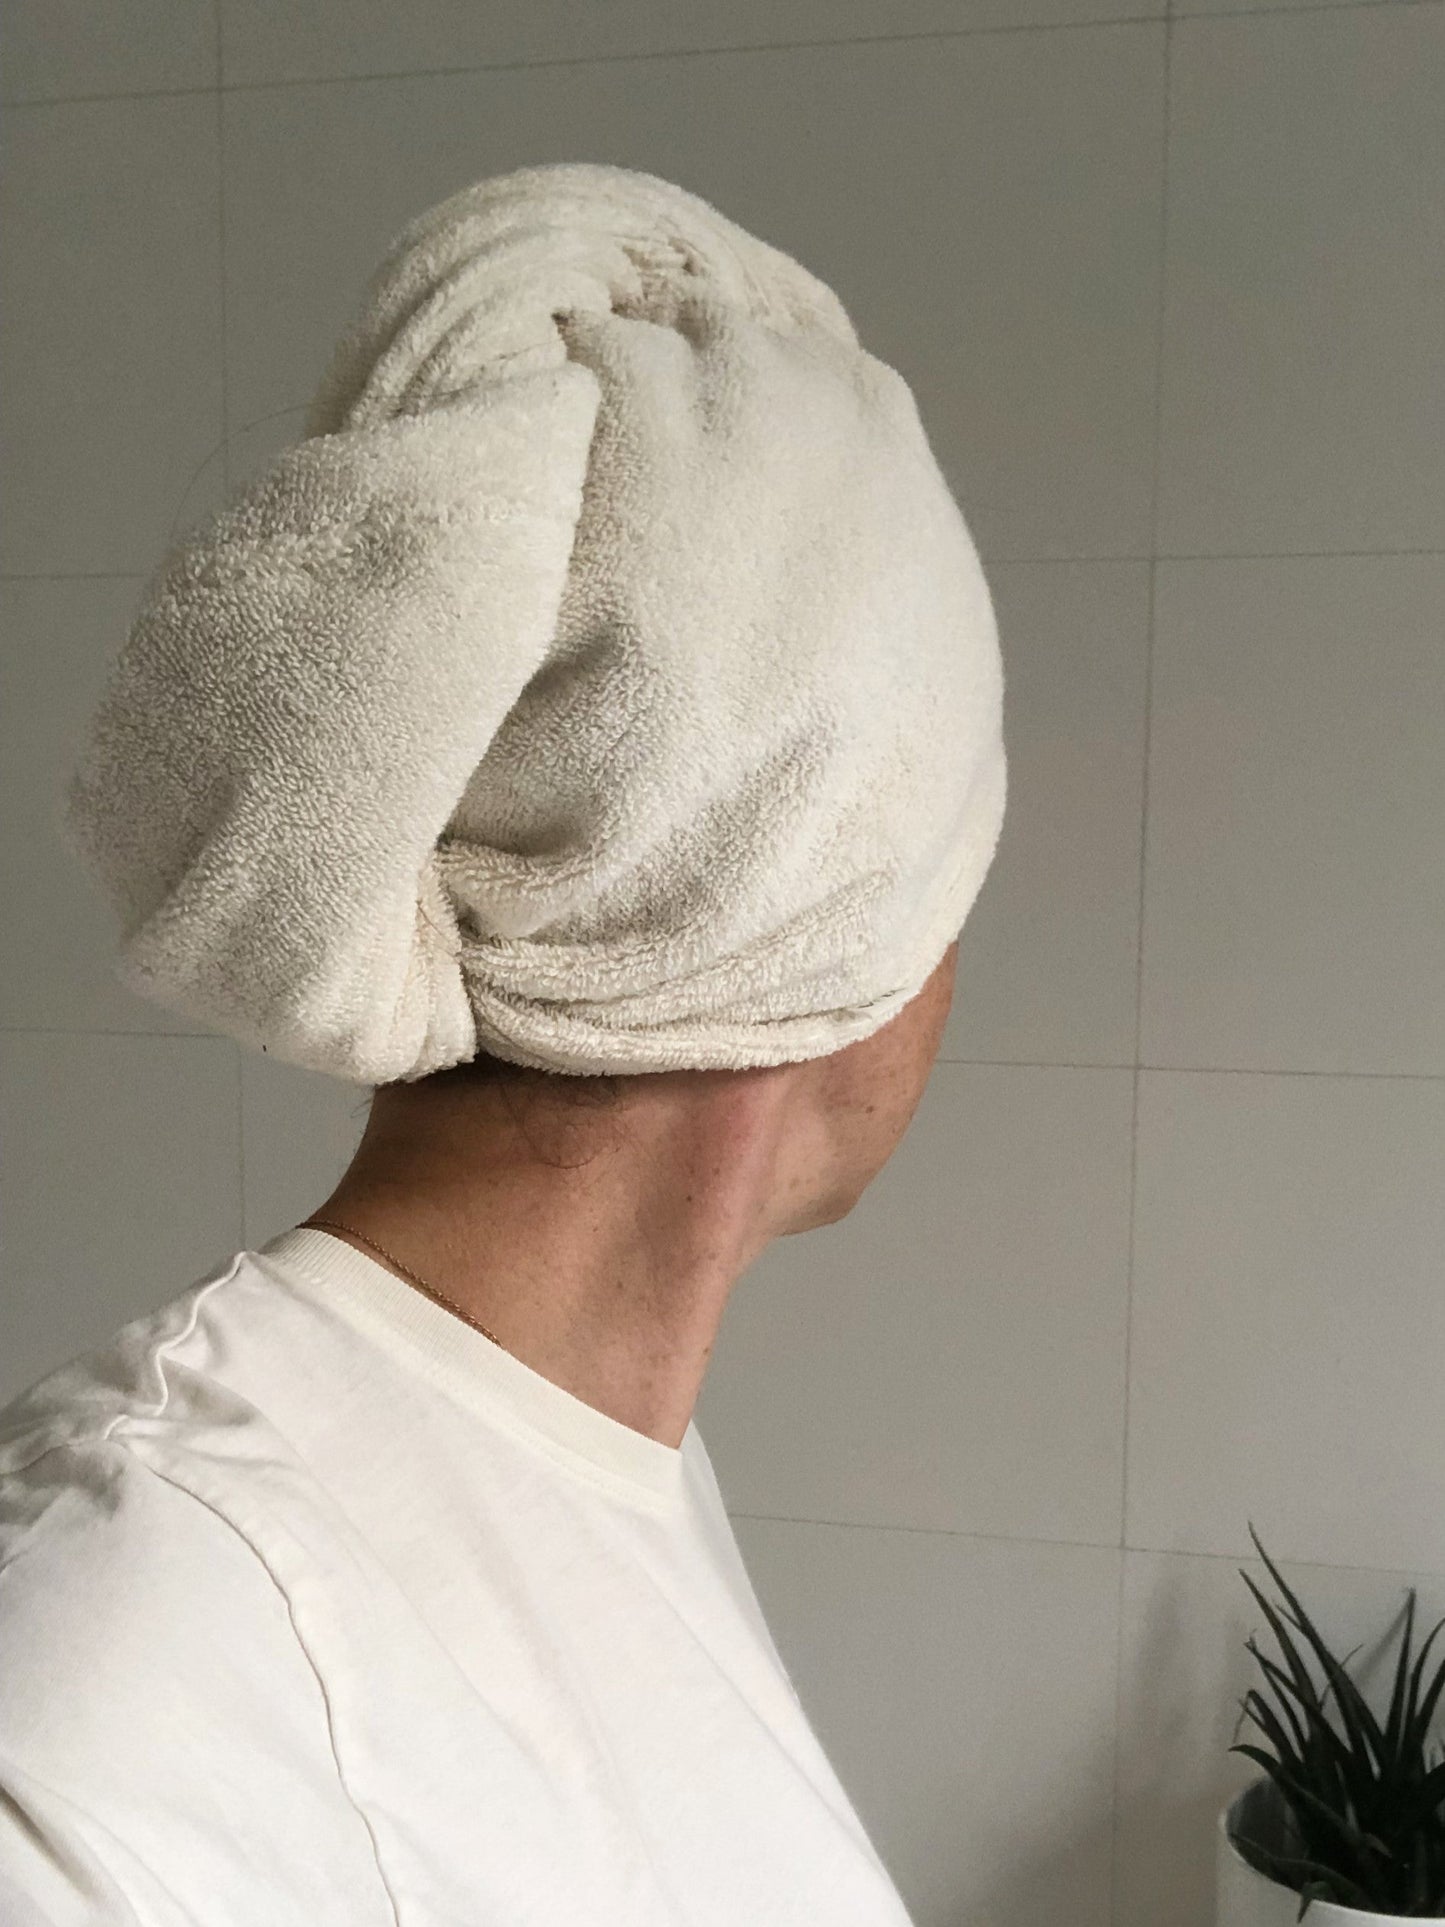 Organic cotton hair towel